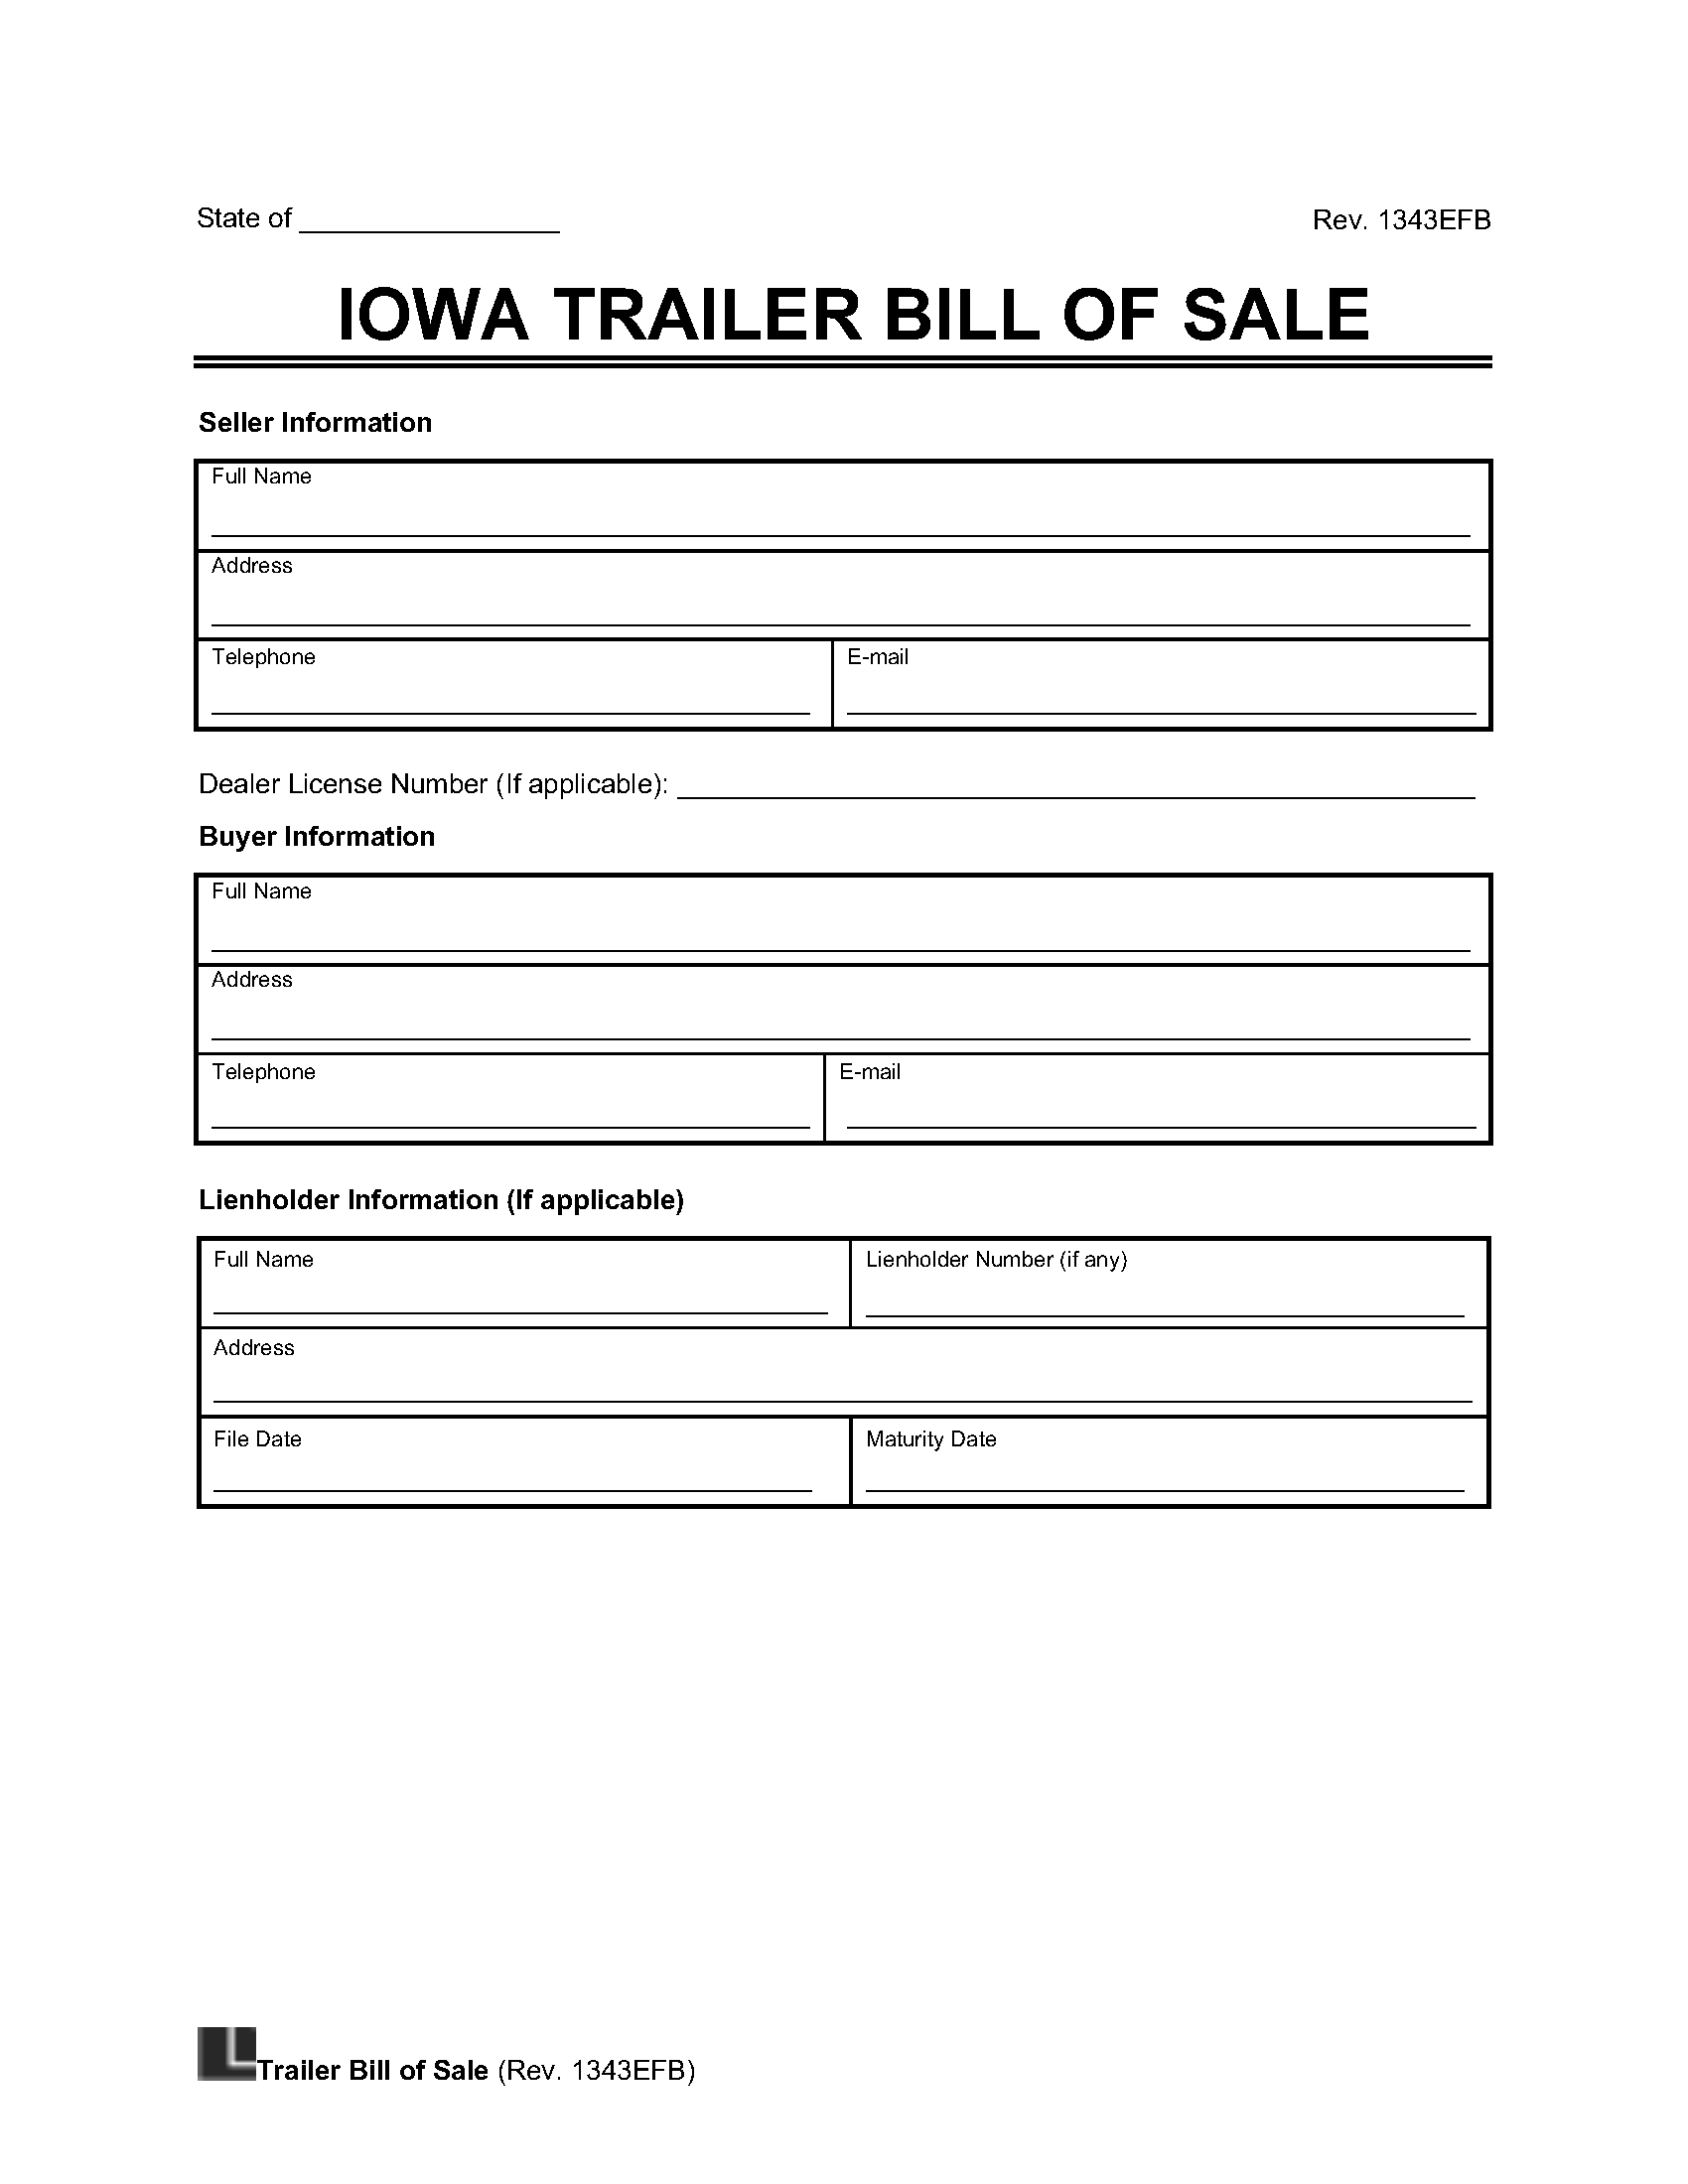 Iowa Trailer Bill of Sale screenshot